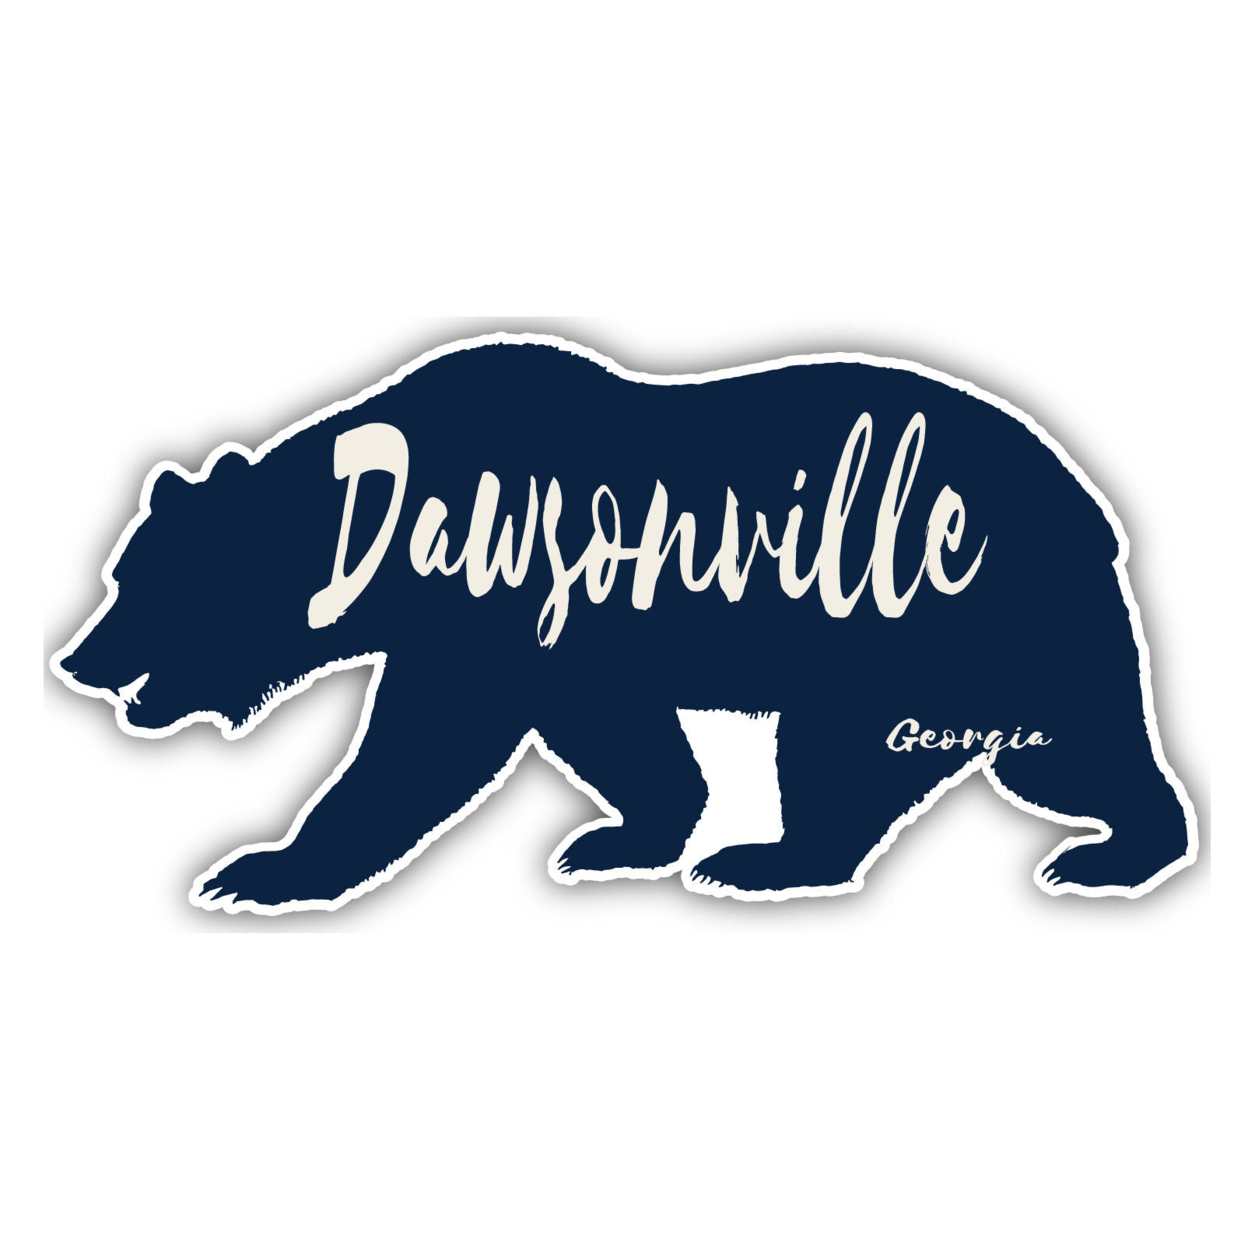 Dawsonville Georgia Souvenir Decorative Stickers (Choose Theme And Size) - Single Unit, 10-Inch, Bear